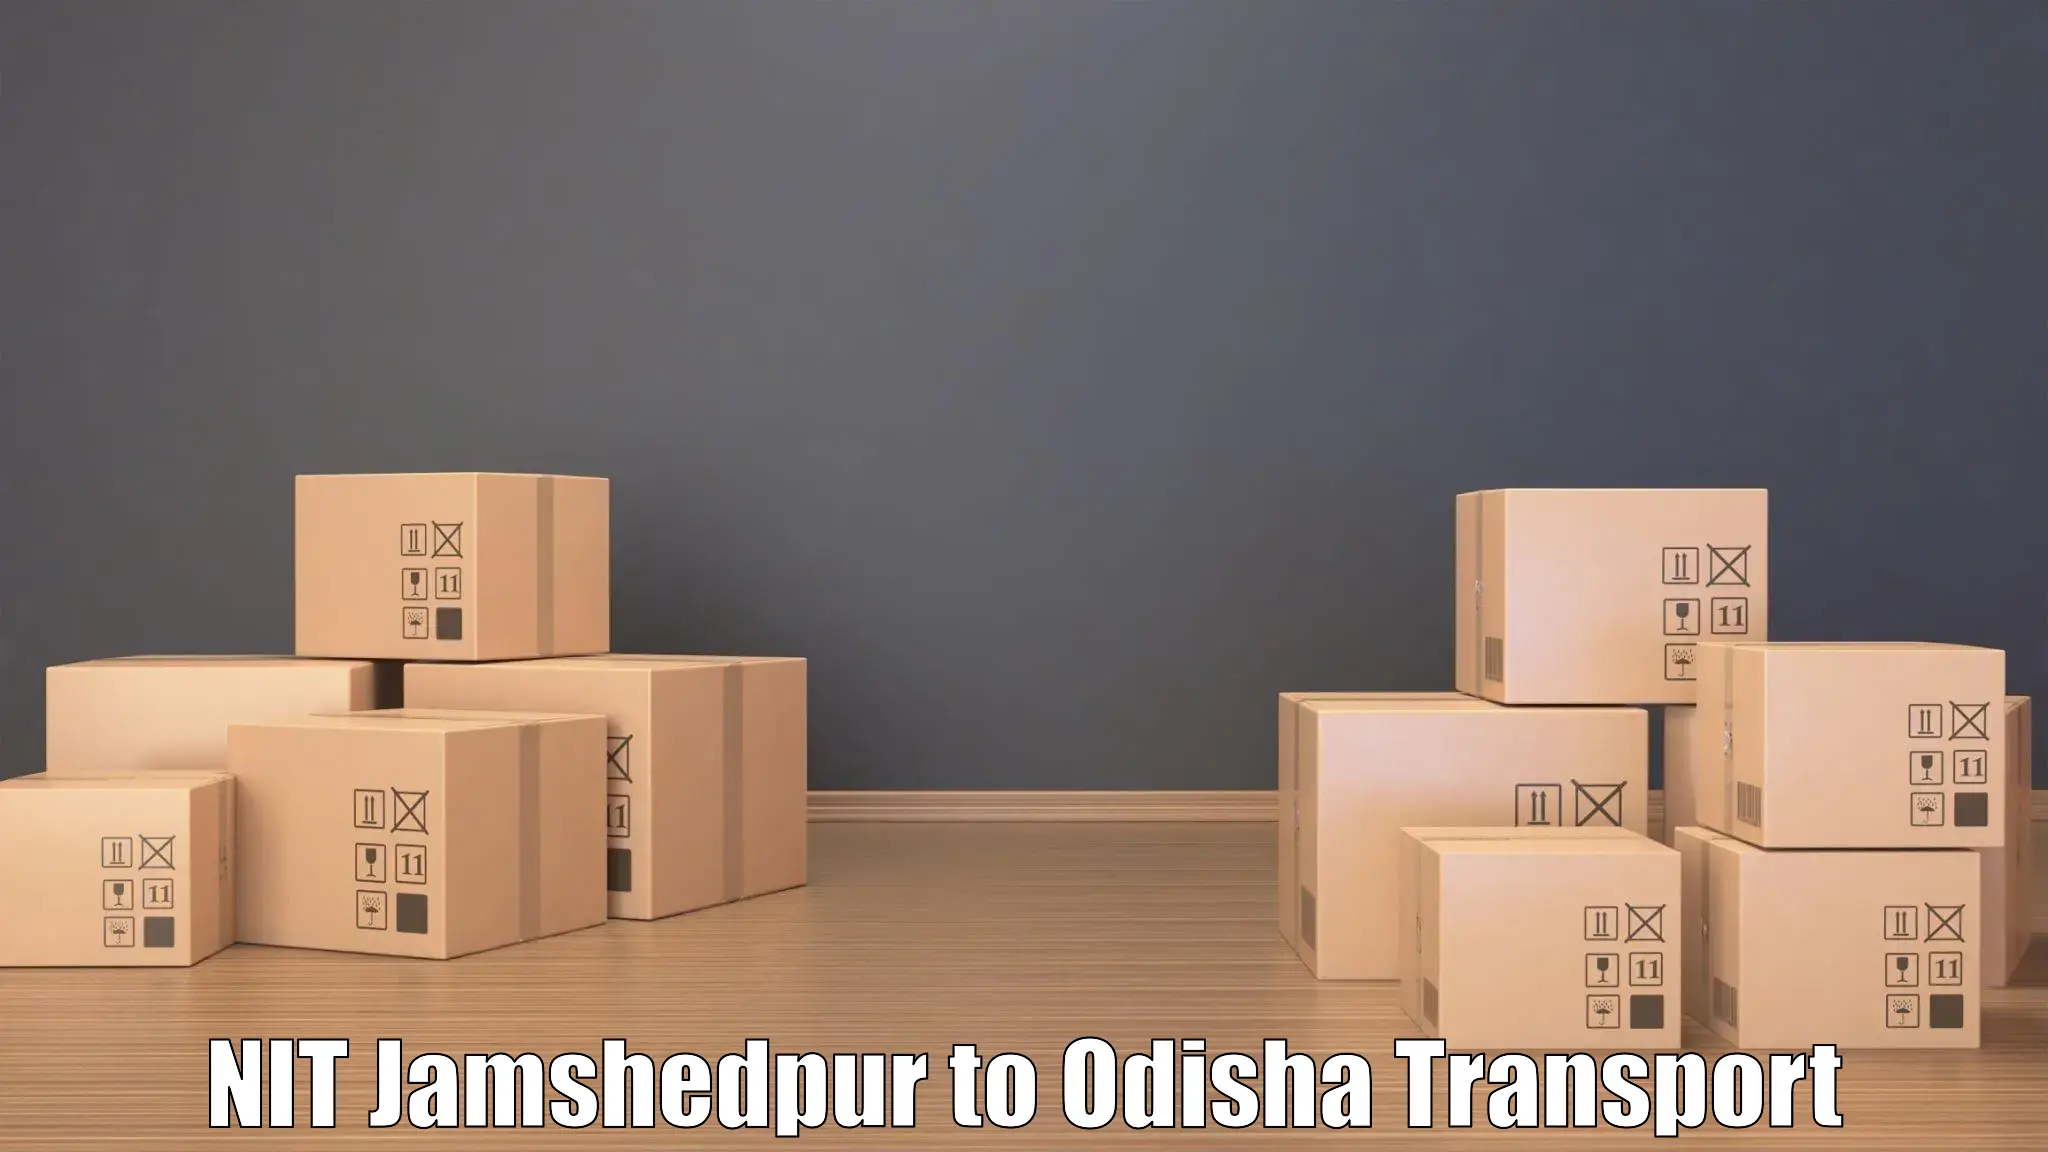 Bike transport service NIT Jamshedpur to Jashipur